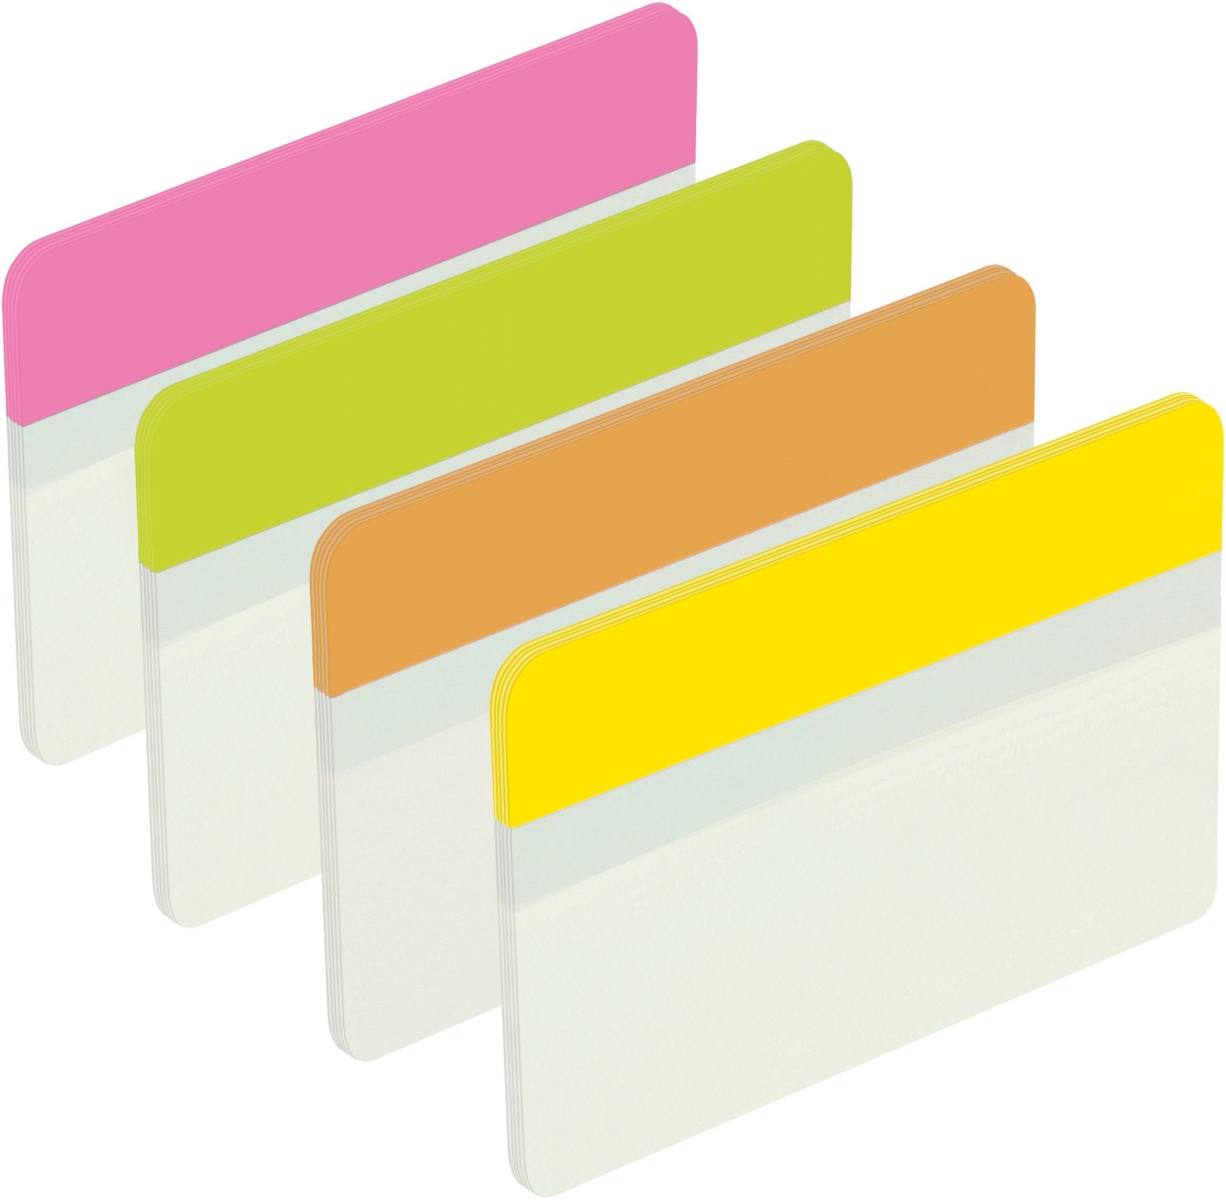 3M Post-it Index Strong 686-PLOY, 50,8 mm x 38 mm, jaune, vert, orange, rose, 4 x 6 bandes adhésives